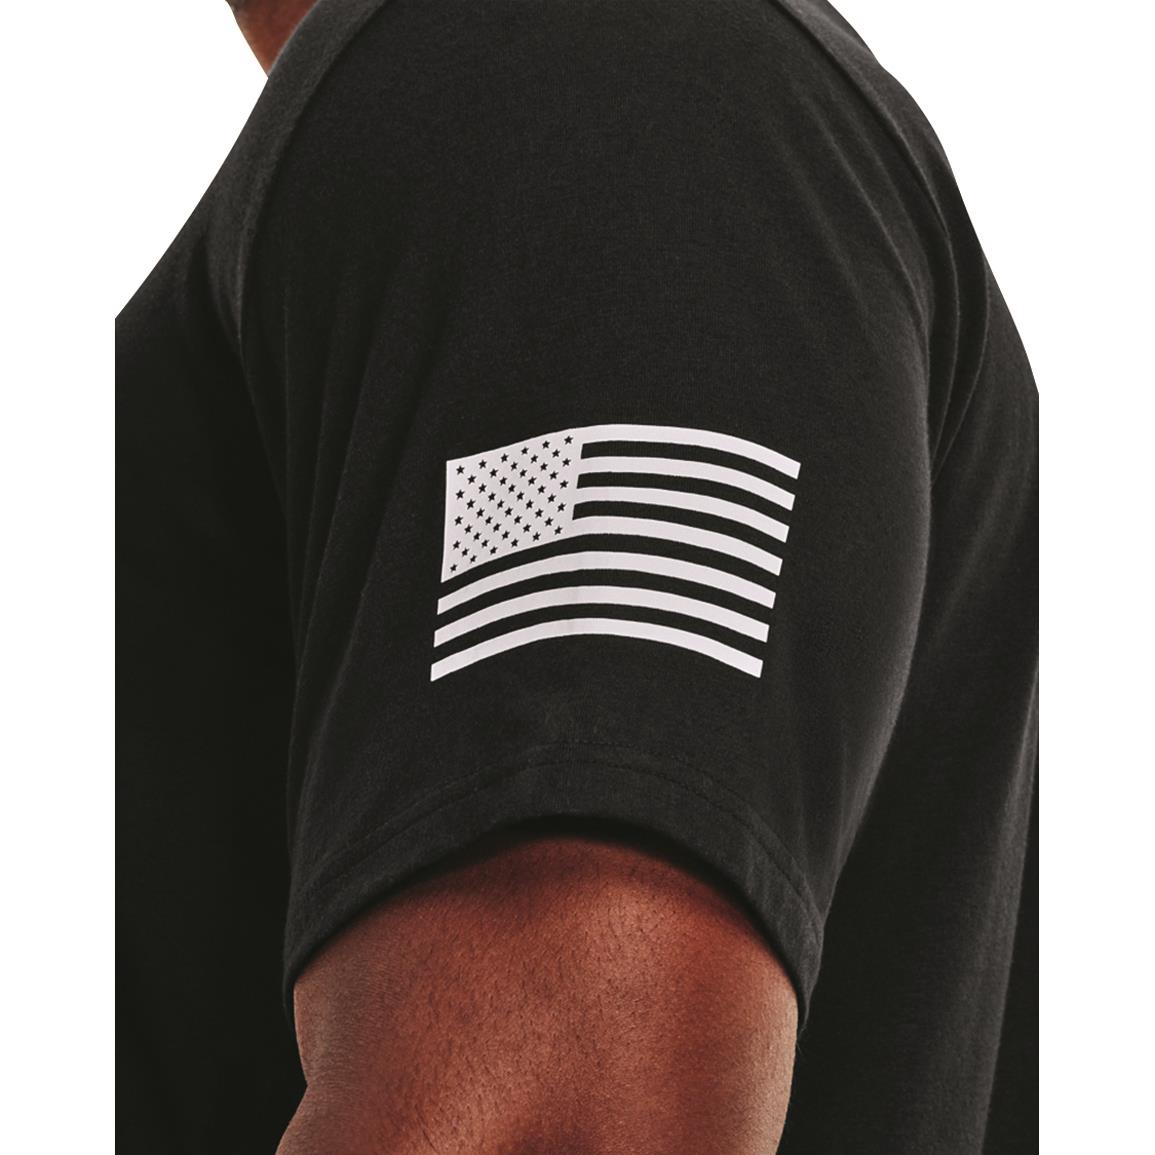 Under Armour Freedom Logo T-Shirt, Black/White